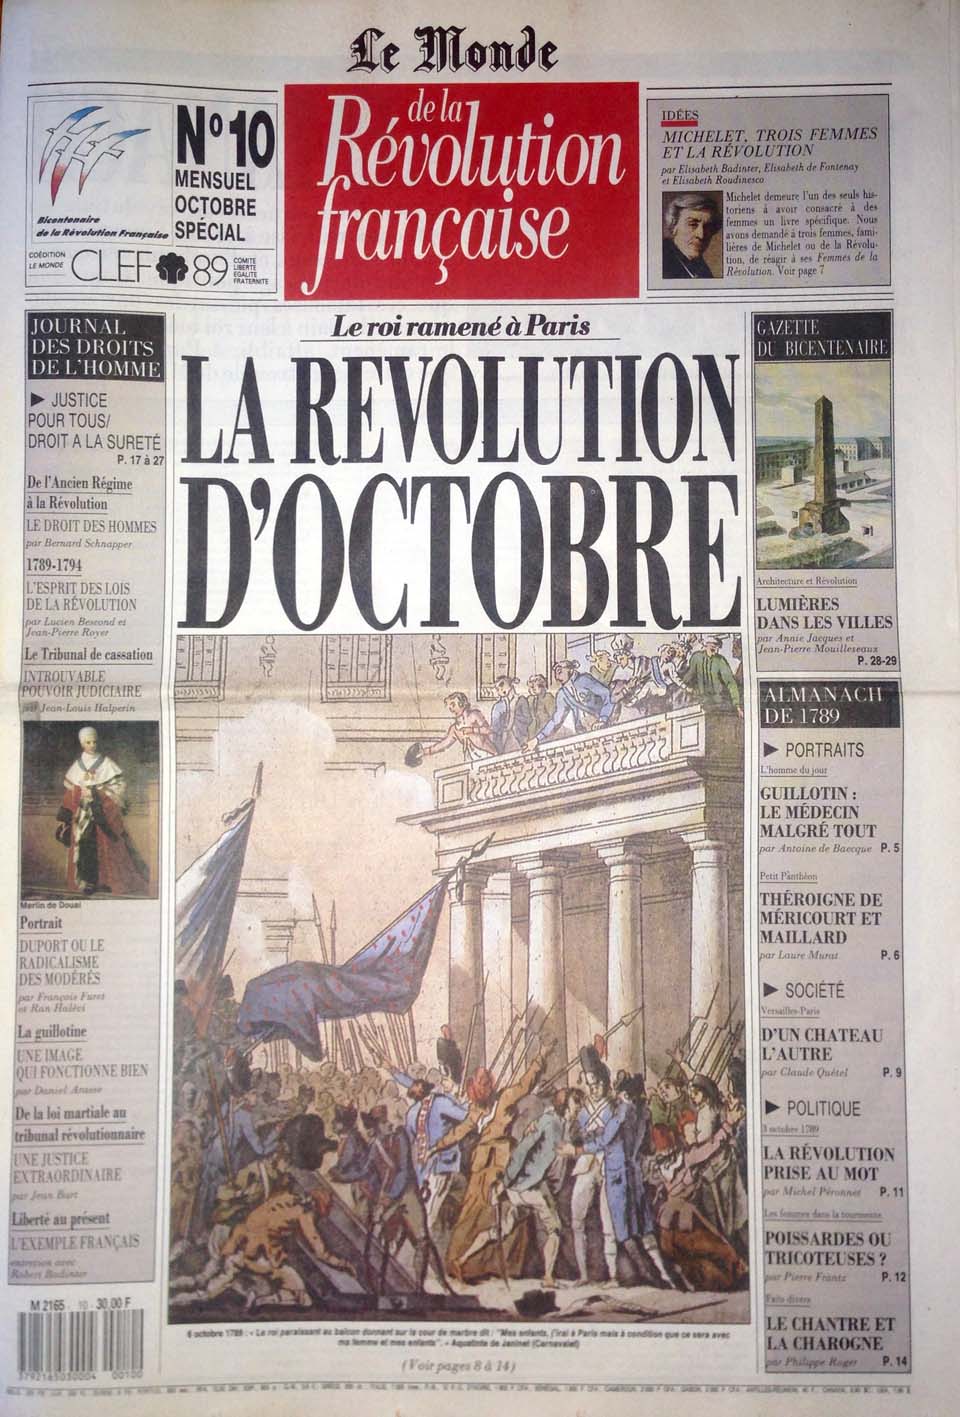 Giornale di Radio Revolution Française N°10